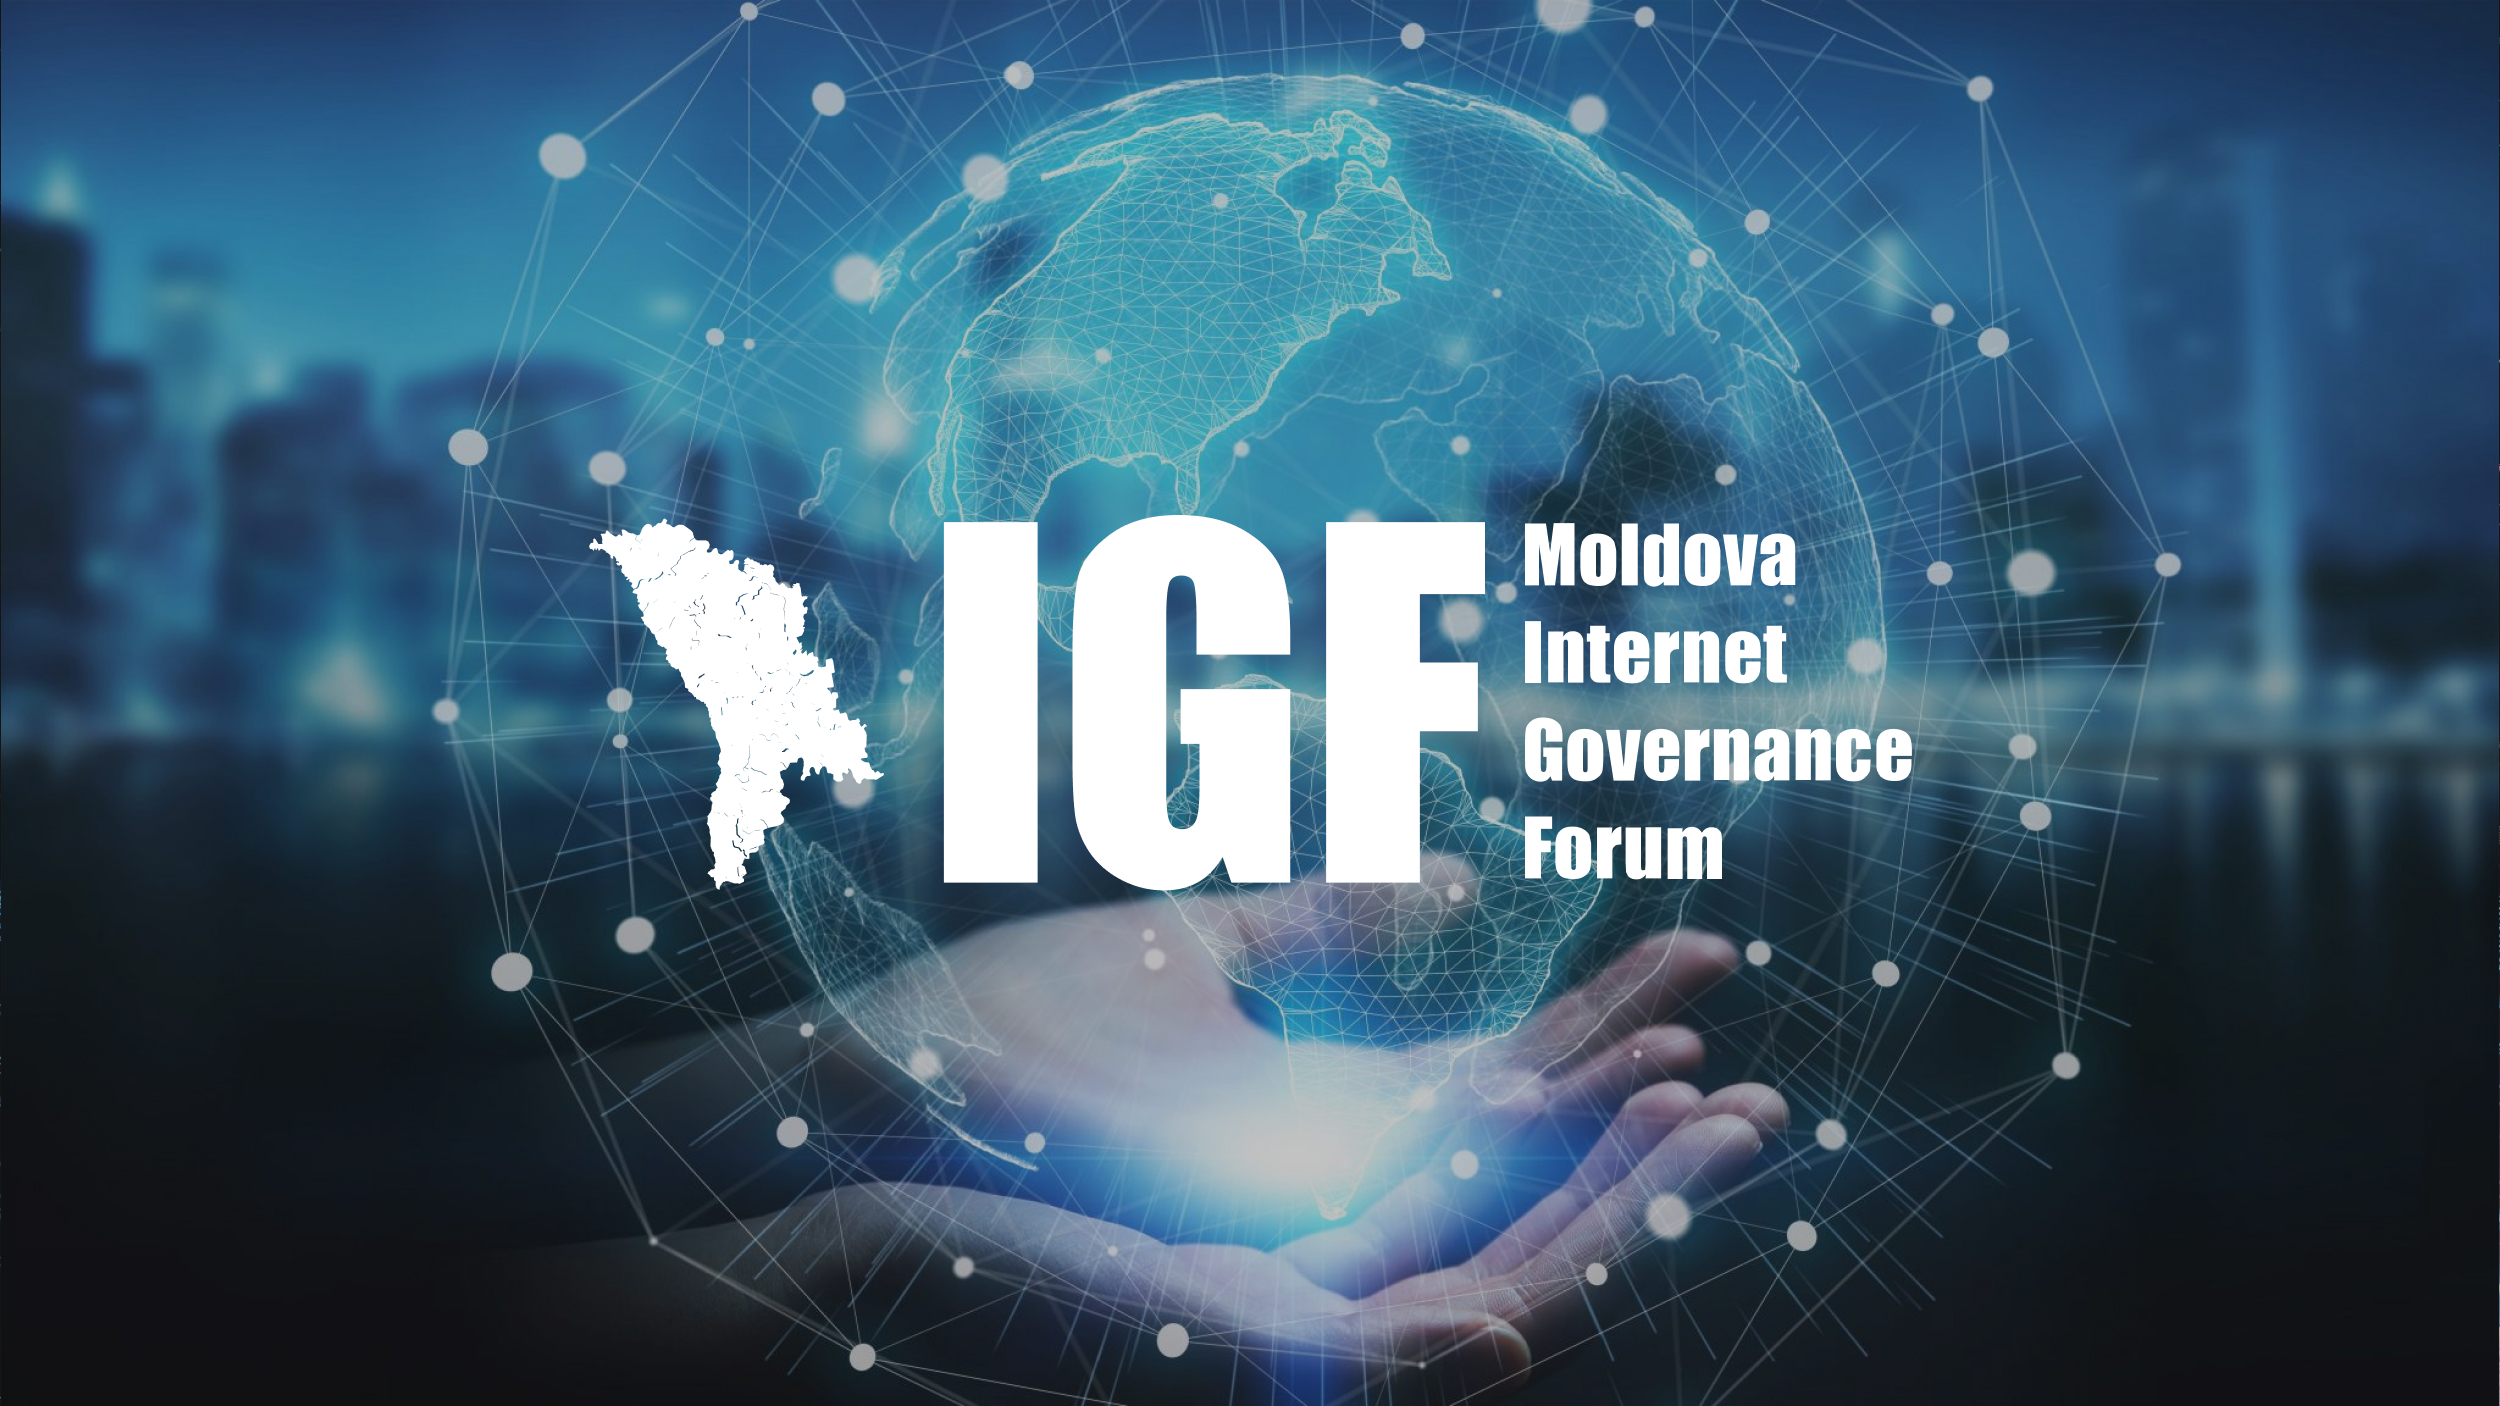 Moldova Internet Governance Forum